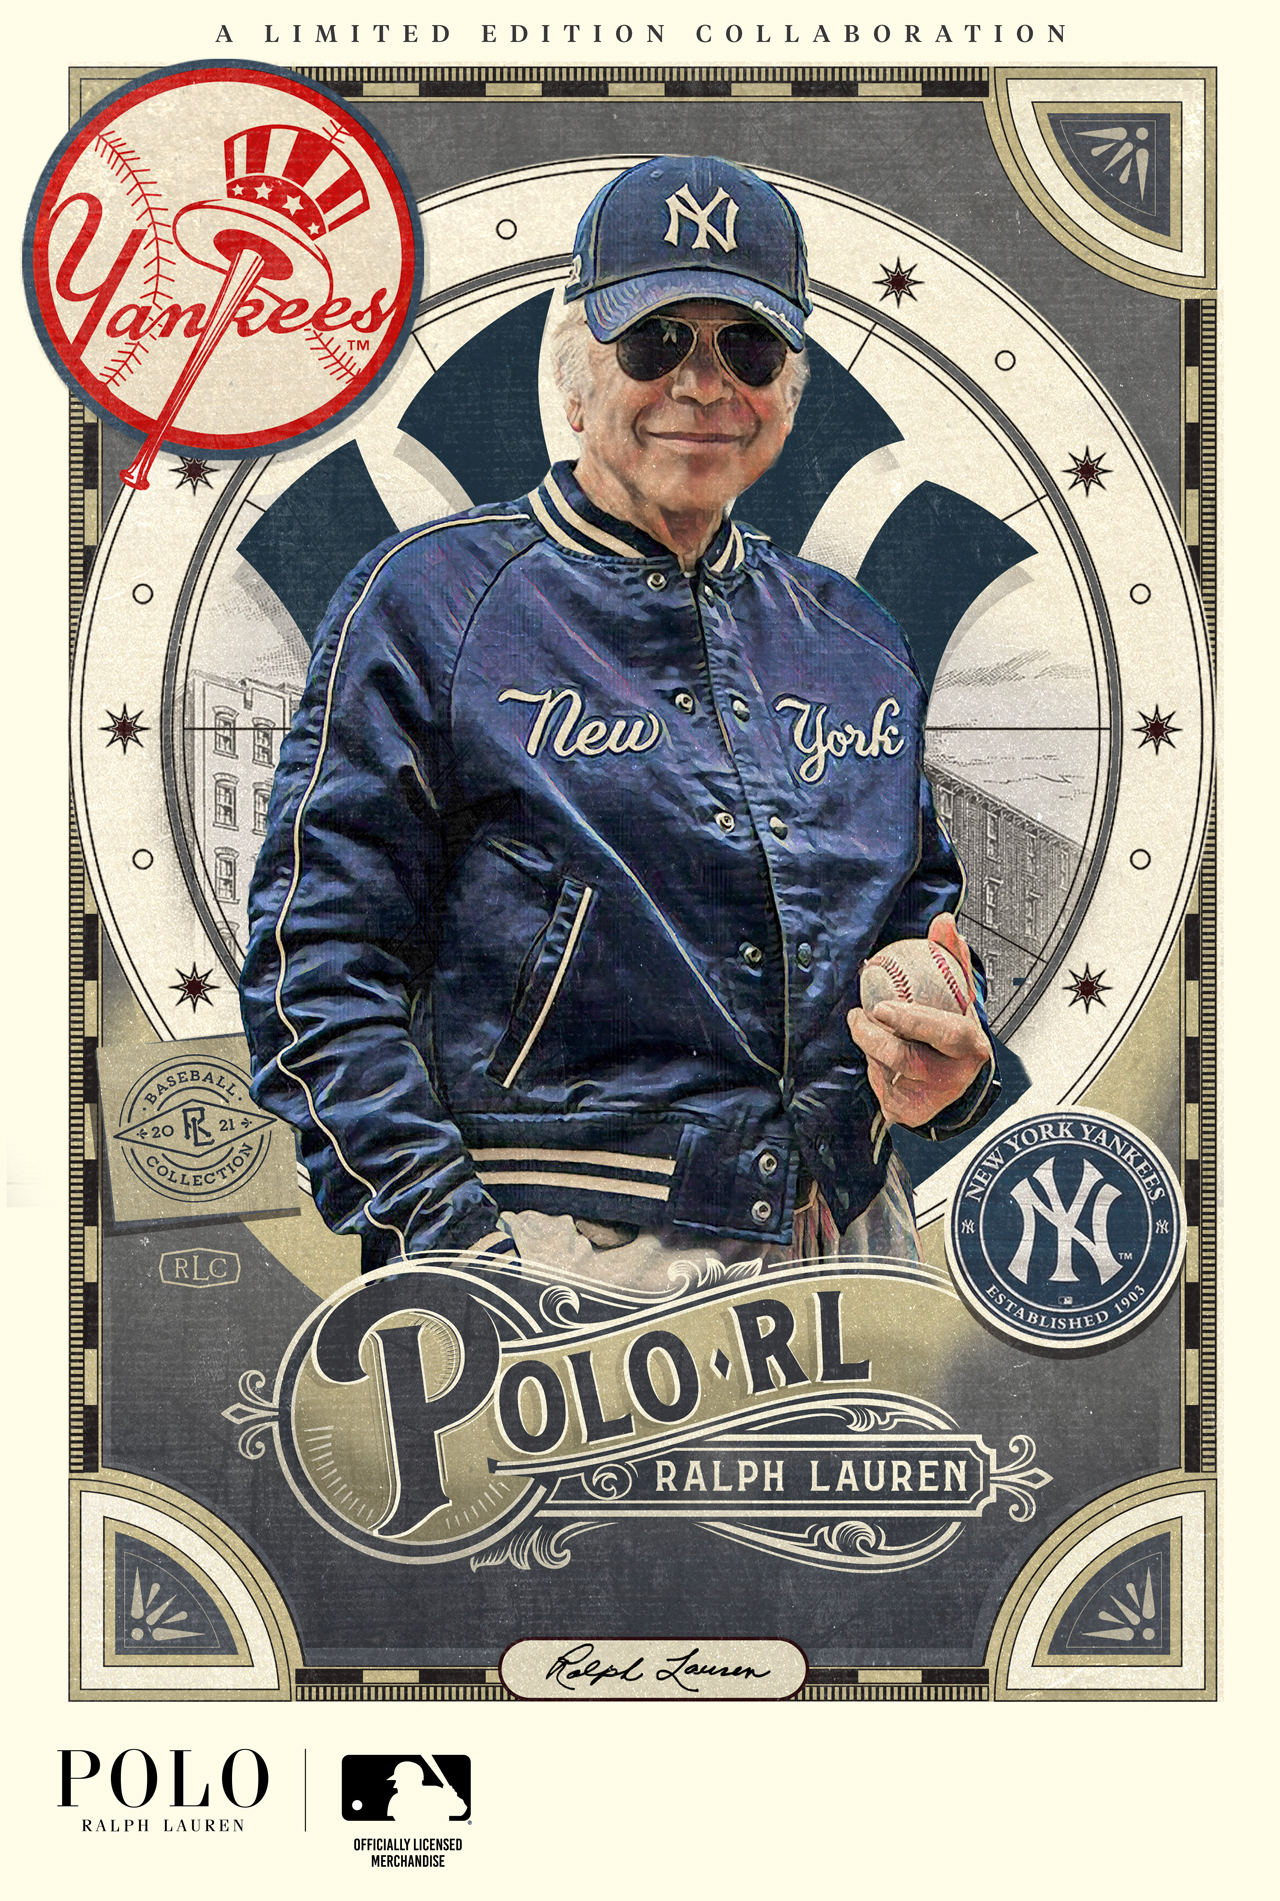 Polo Ralph Lauren New York Yankees MLB Limited Edition Shirt Navy